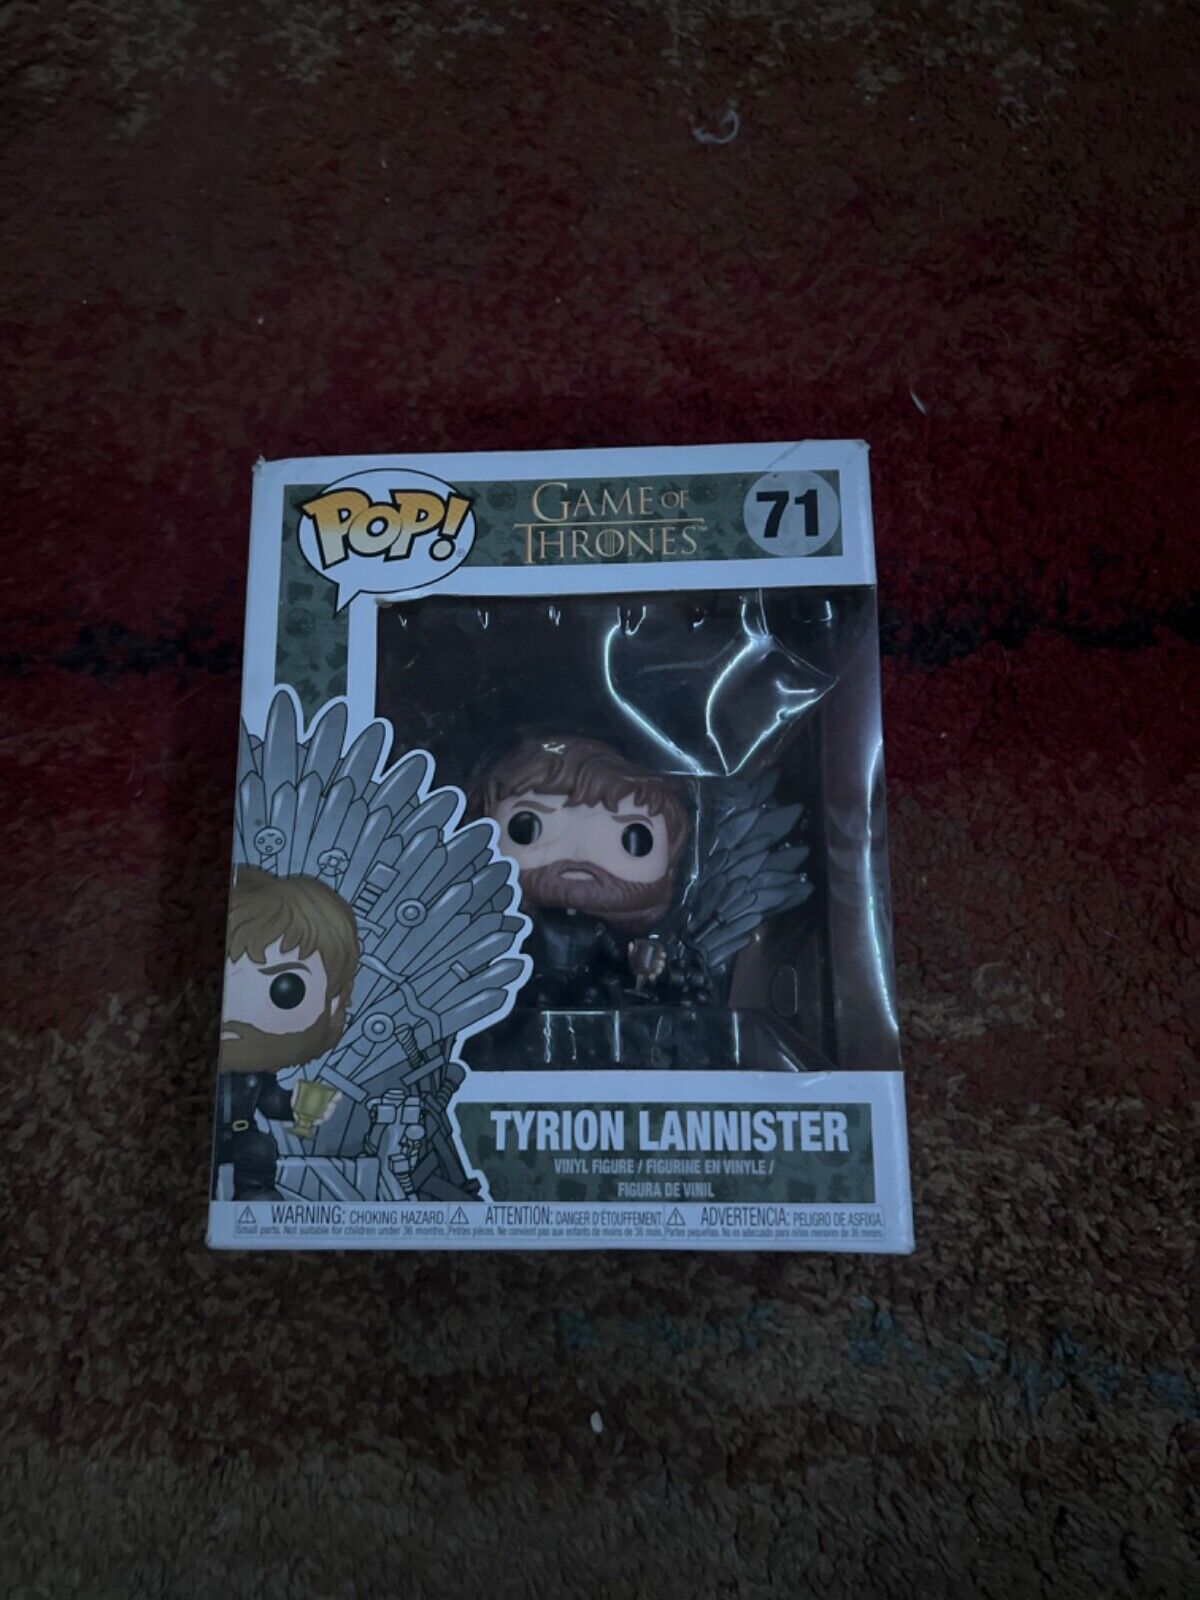 GU Funko Pop Game of Thrones Vinyl Figure Deluxe Tyrion Lannister Iron Throne 71